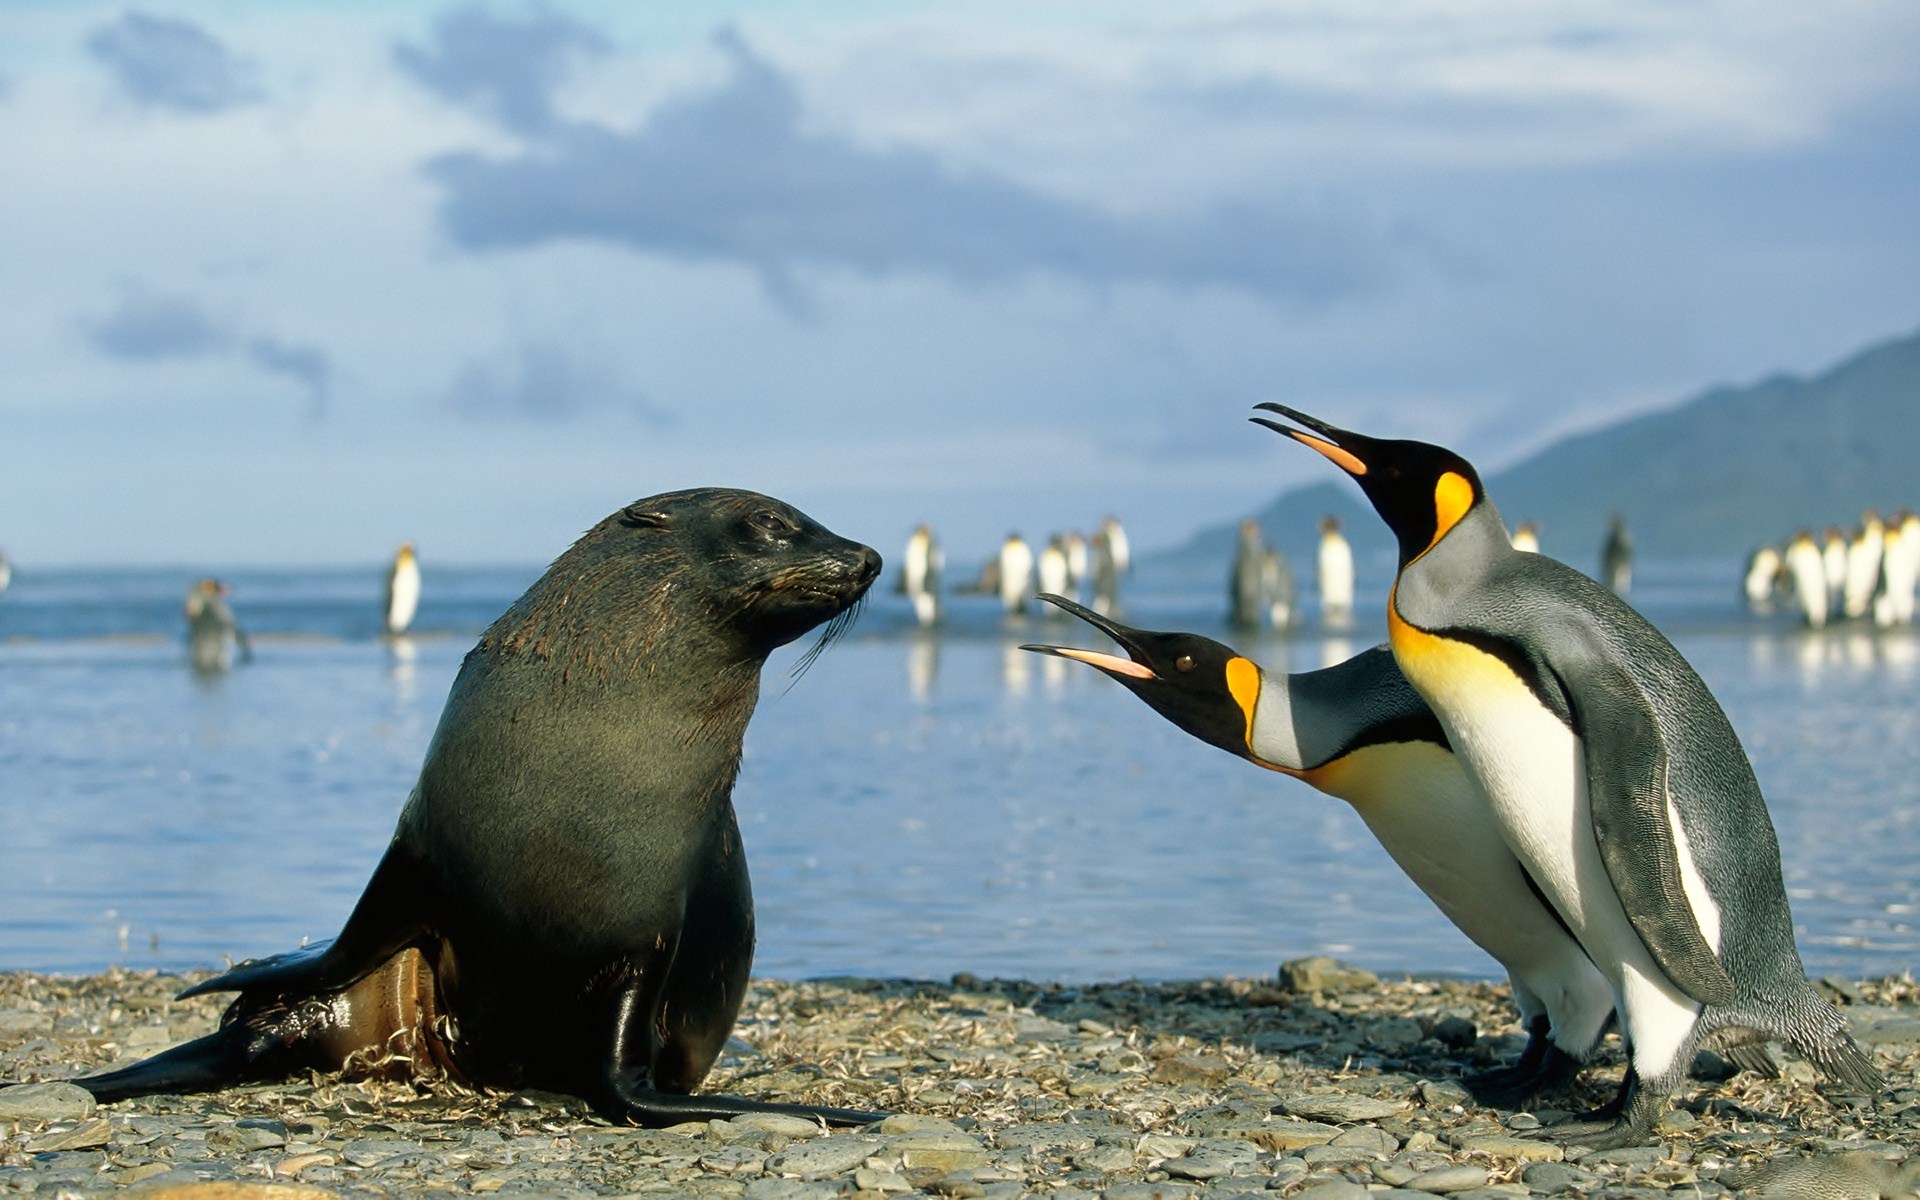 Descarga gratuita de fondo de pantalla para móvil de Animales, Pingüino.